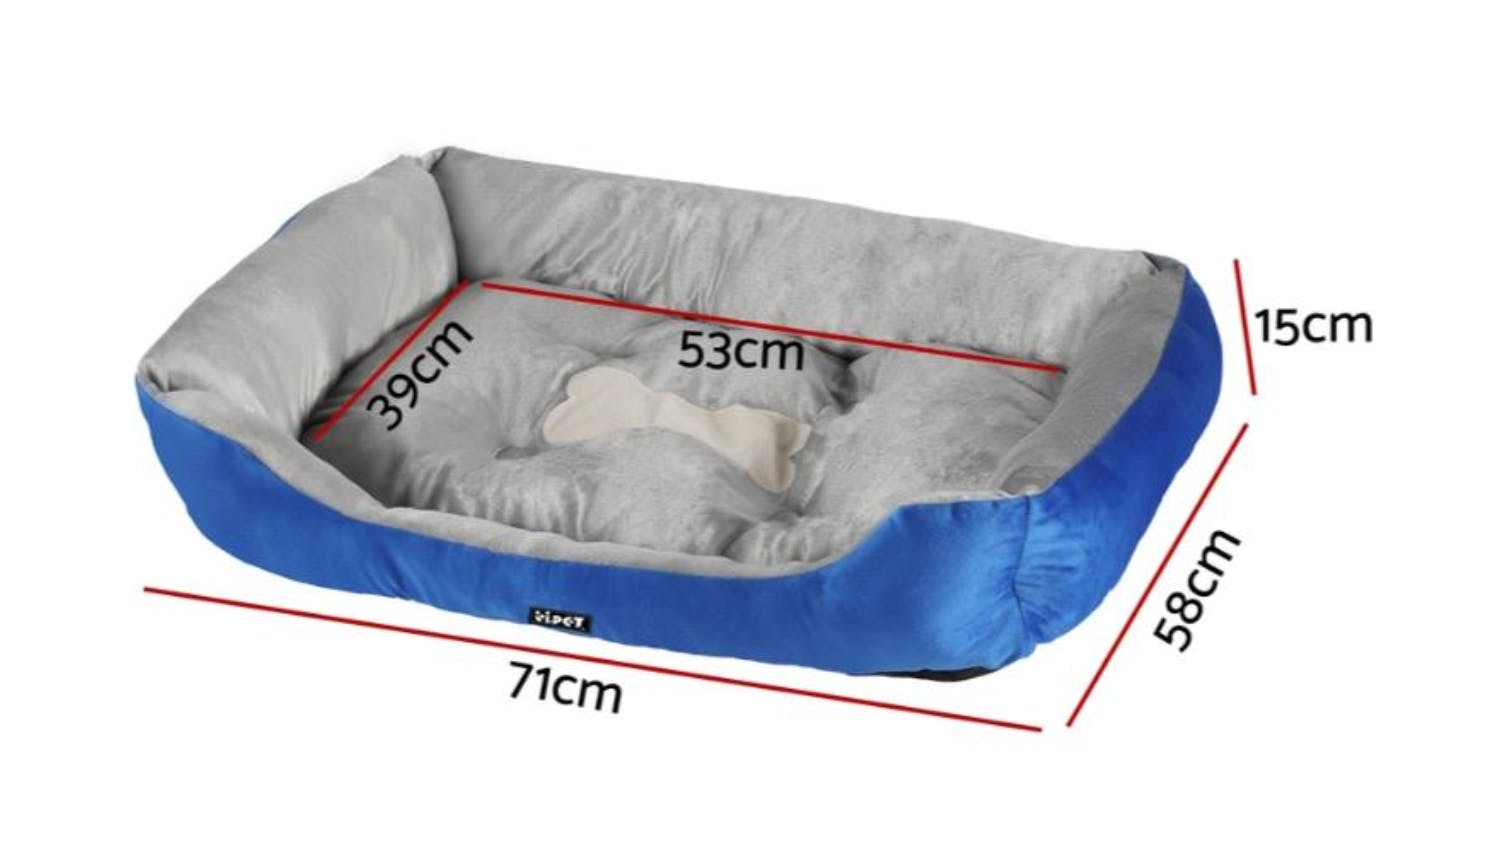 i.Pet Plush Bolster Dog Bed 71 x 58 x 15cm - Blue